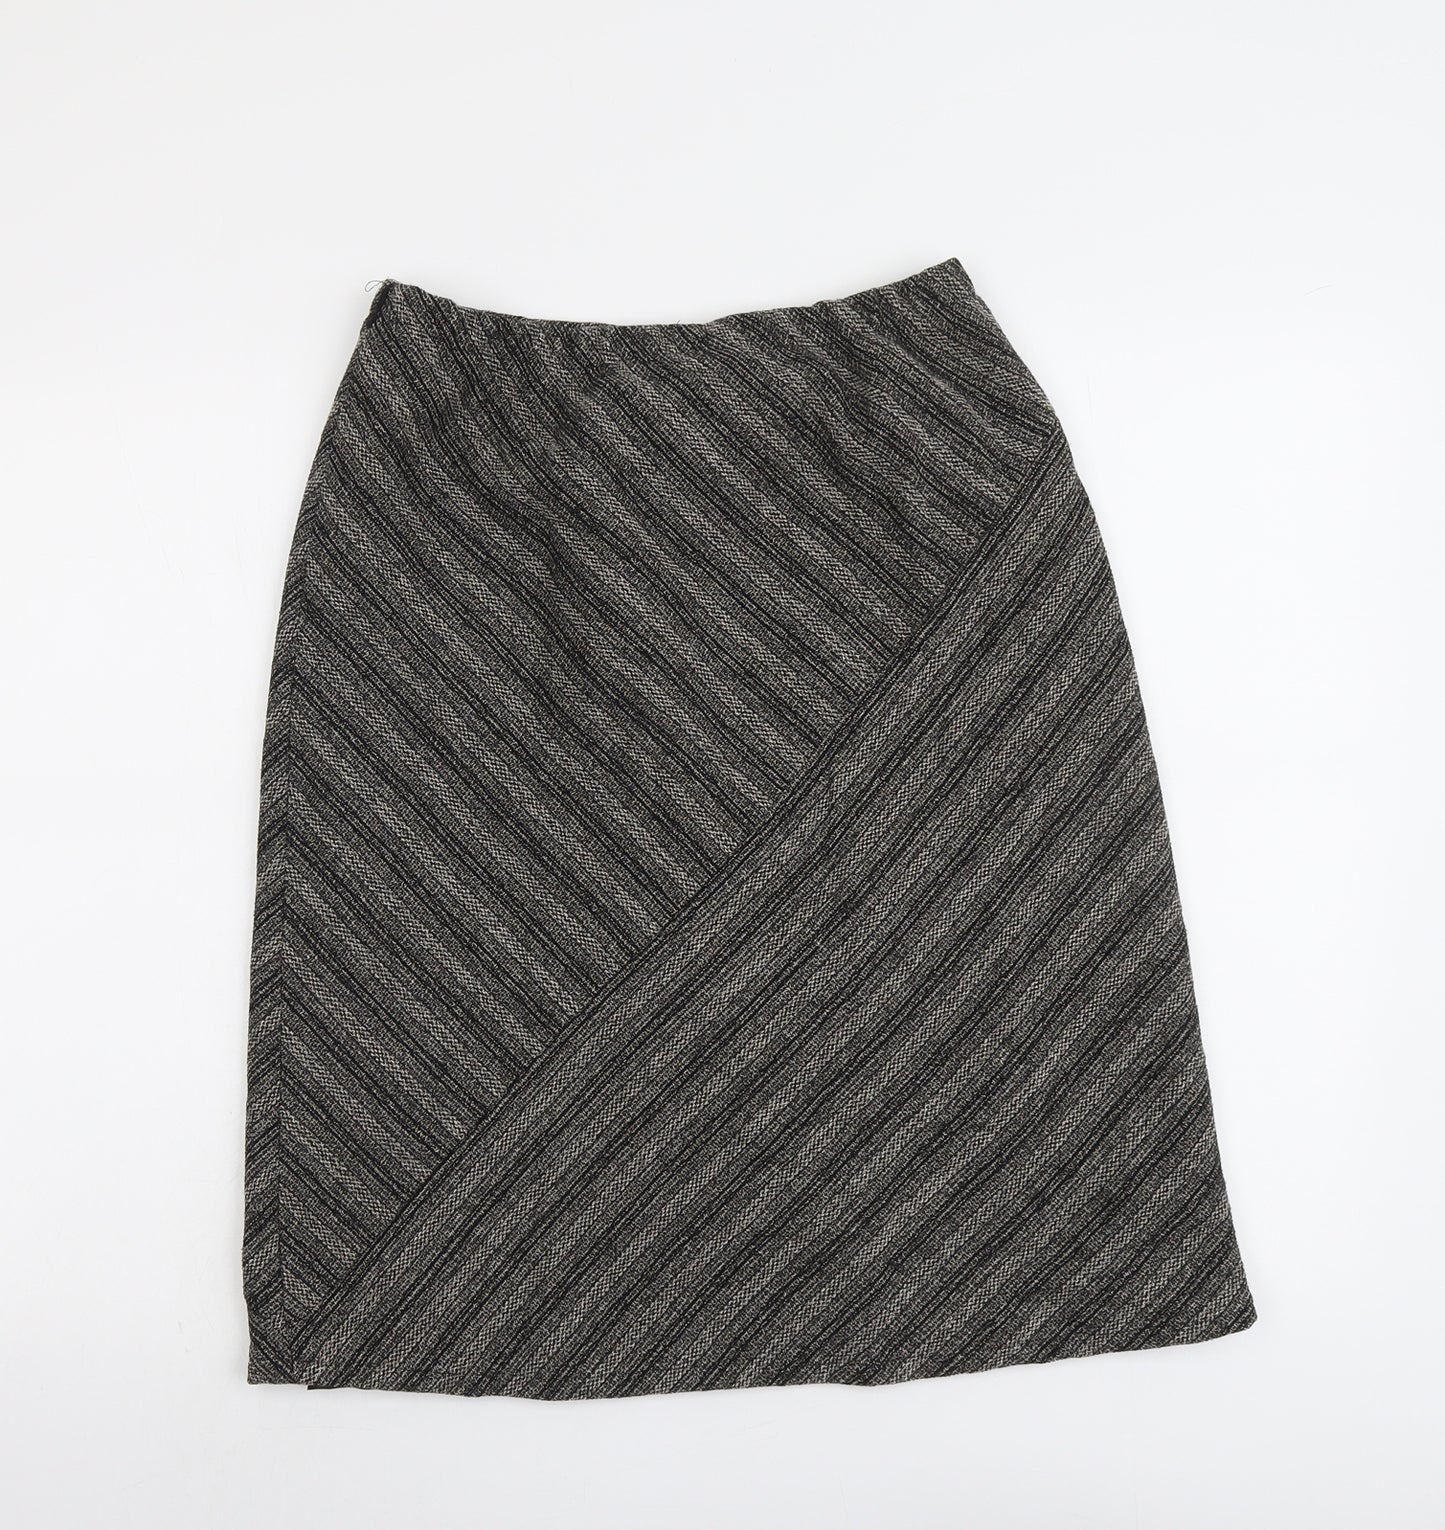 Debenhams Womens Black Striped Polyester A-Line Skirt Size 14